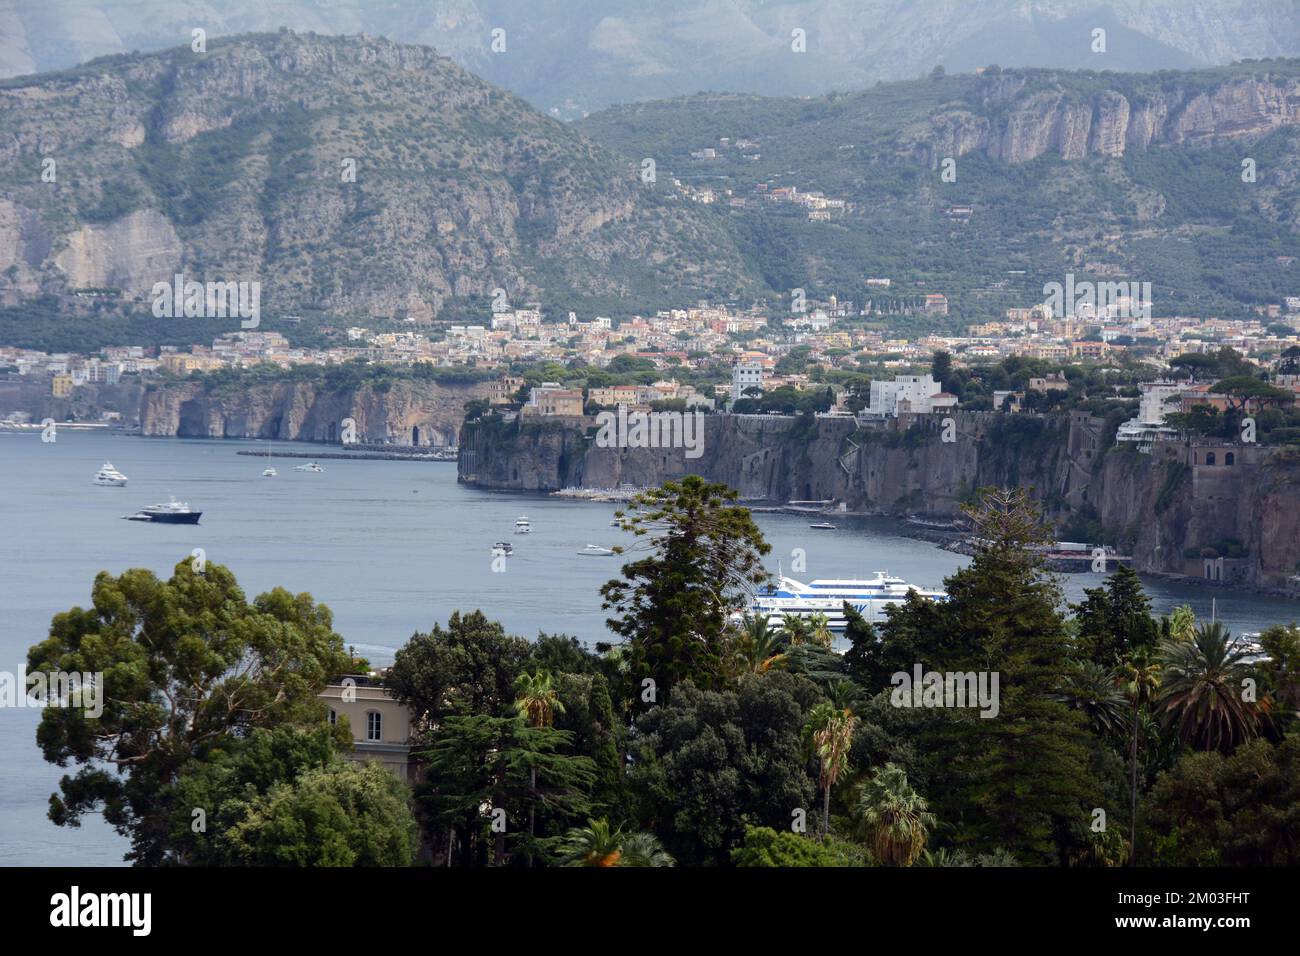 The Italian Mediterranean coastal city of Sorrento, part of the metropolitan city of Naples, near the Amalfi Coast, in Campania, southern Italy. Stock Photo